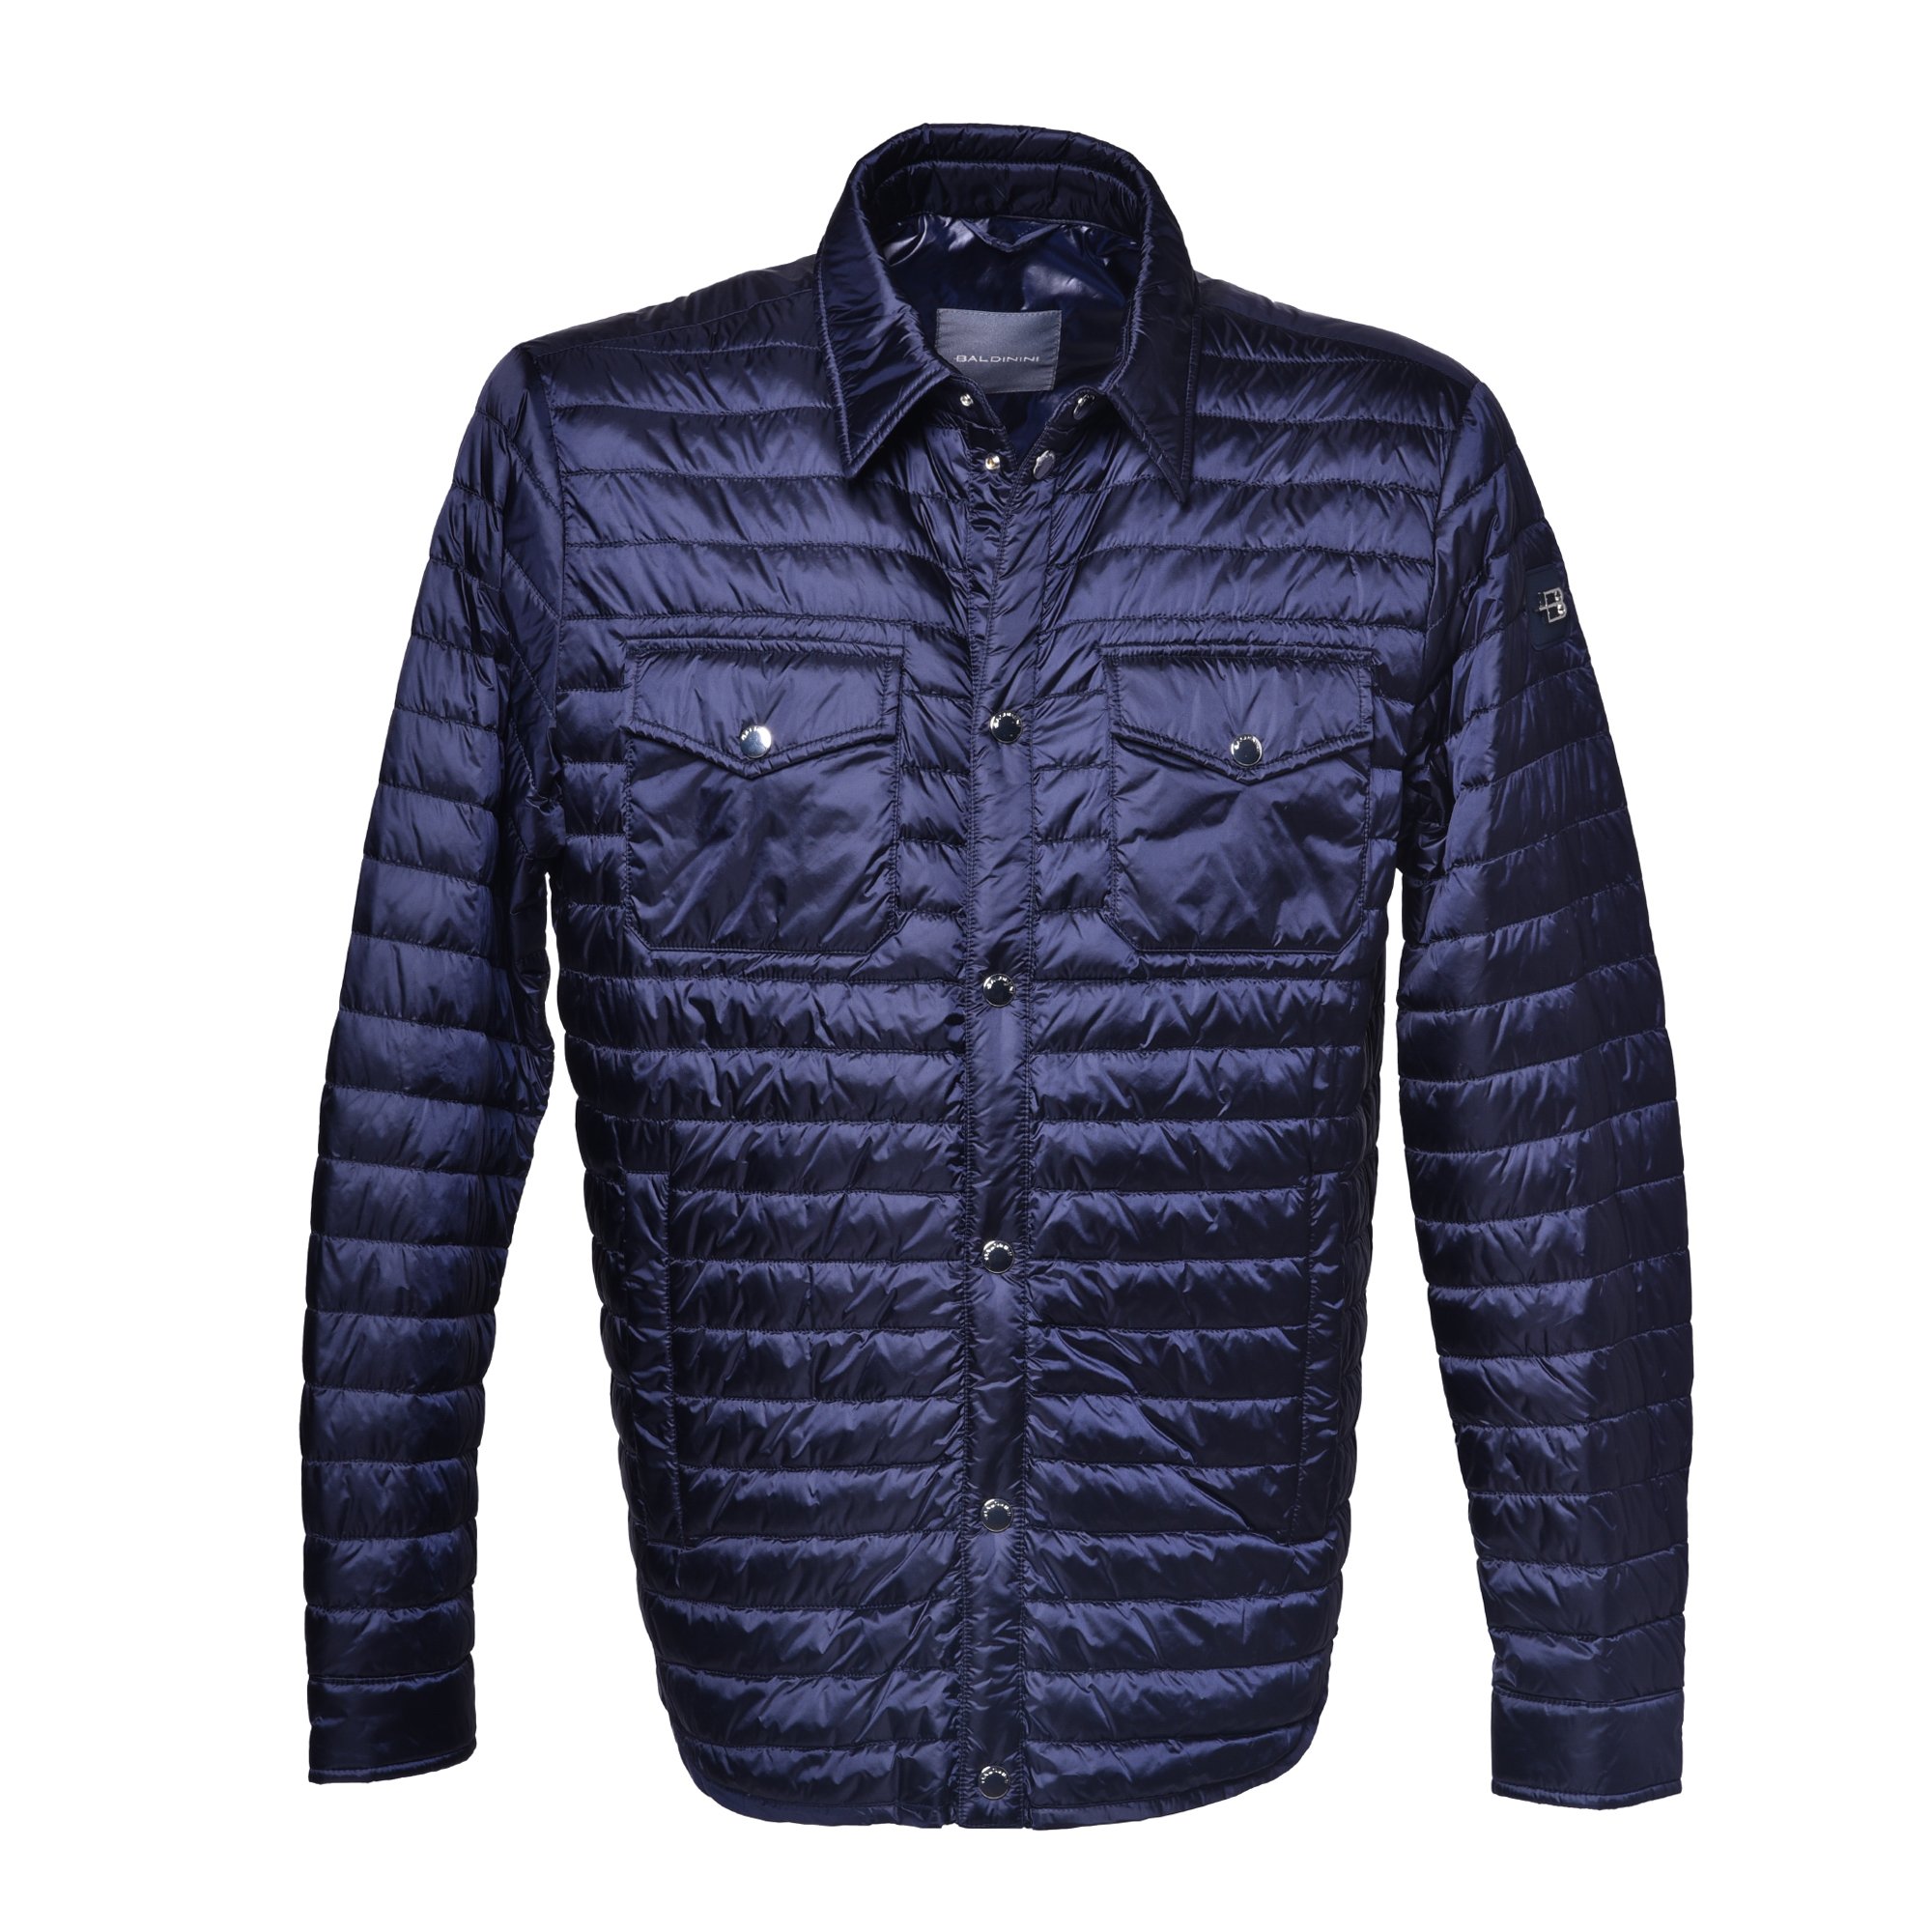 Down jacket in navy blue nylon image